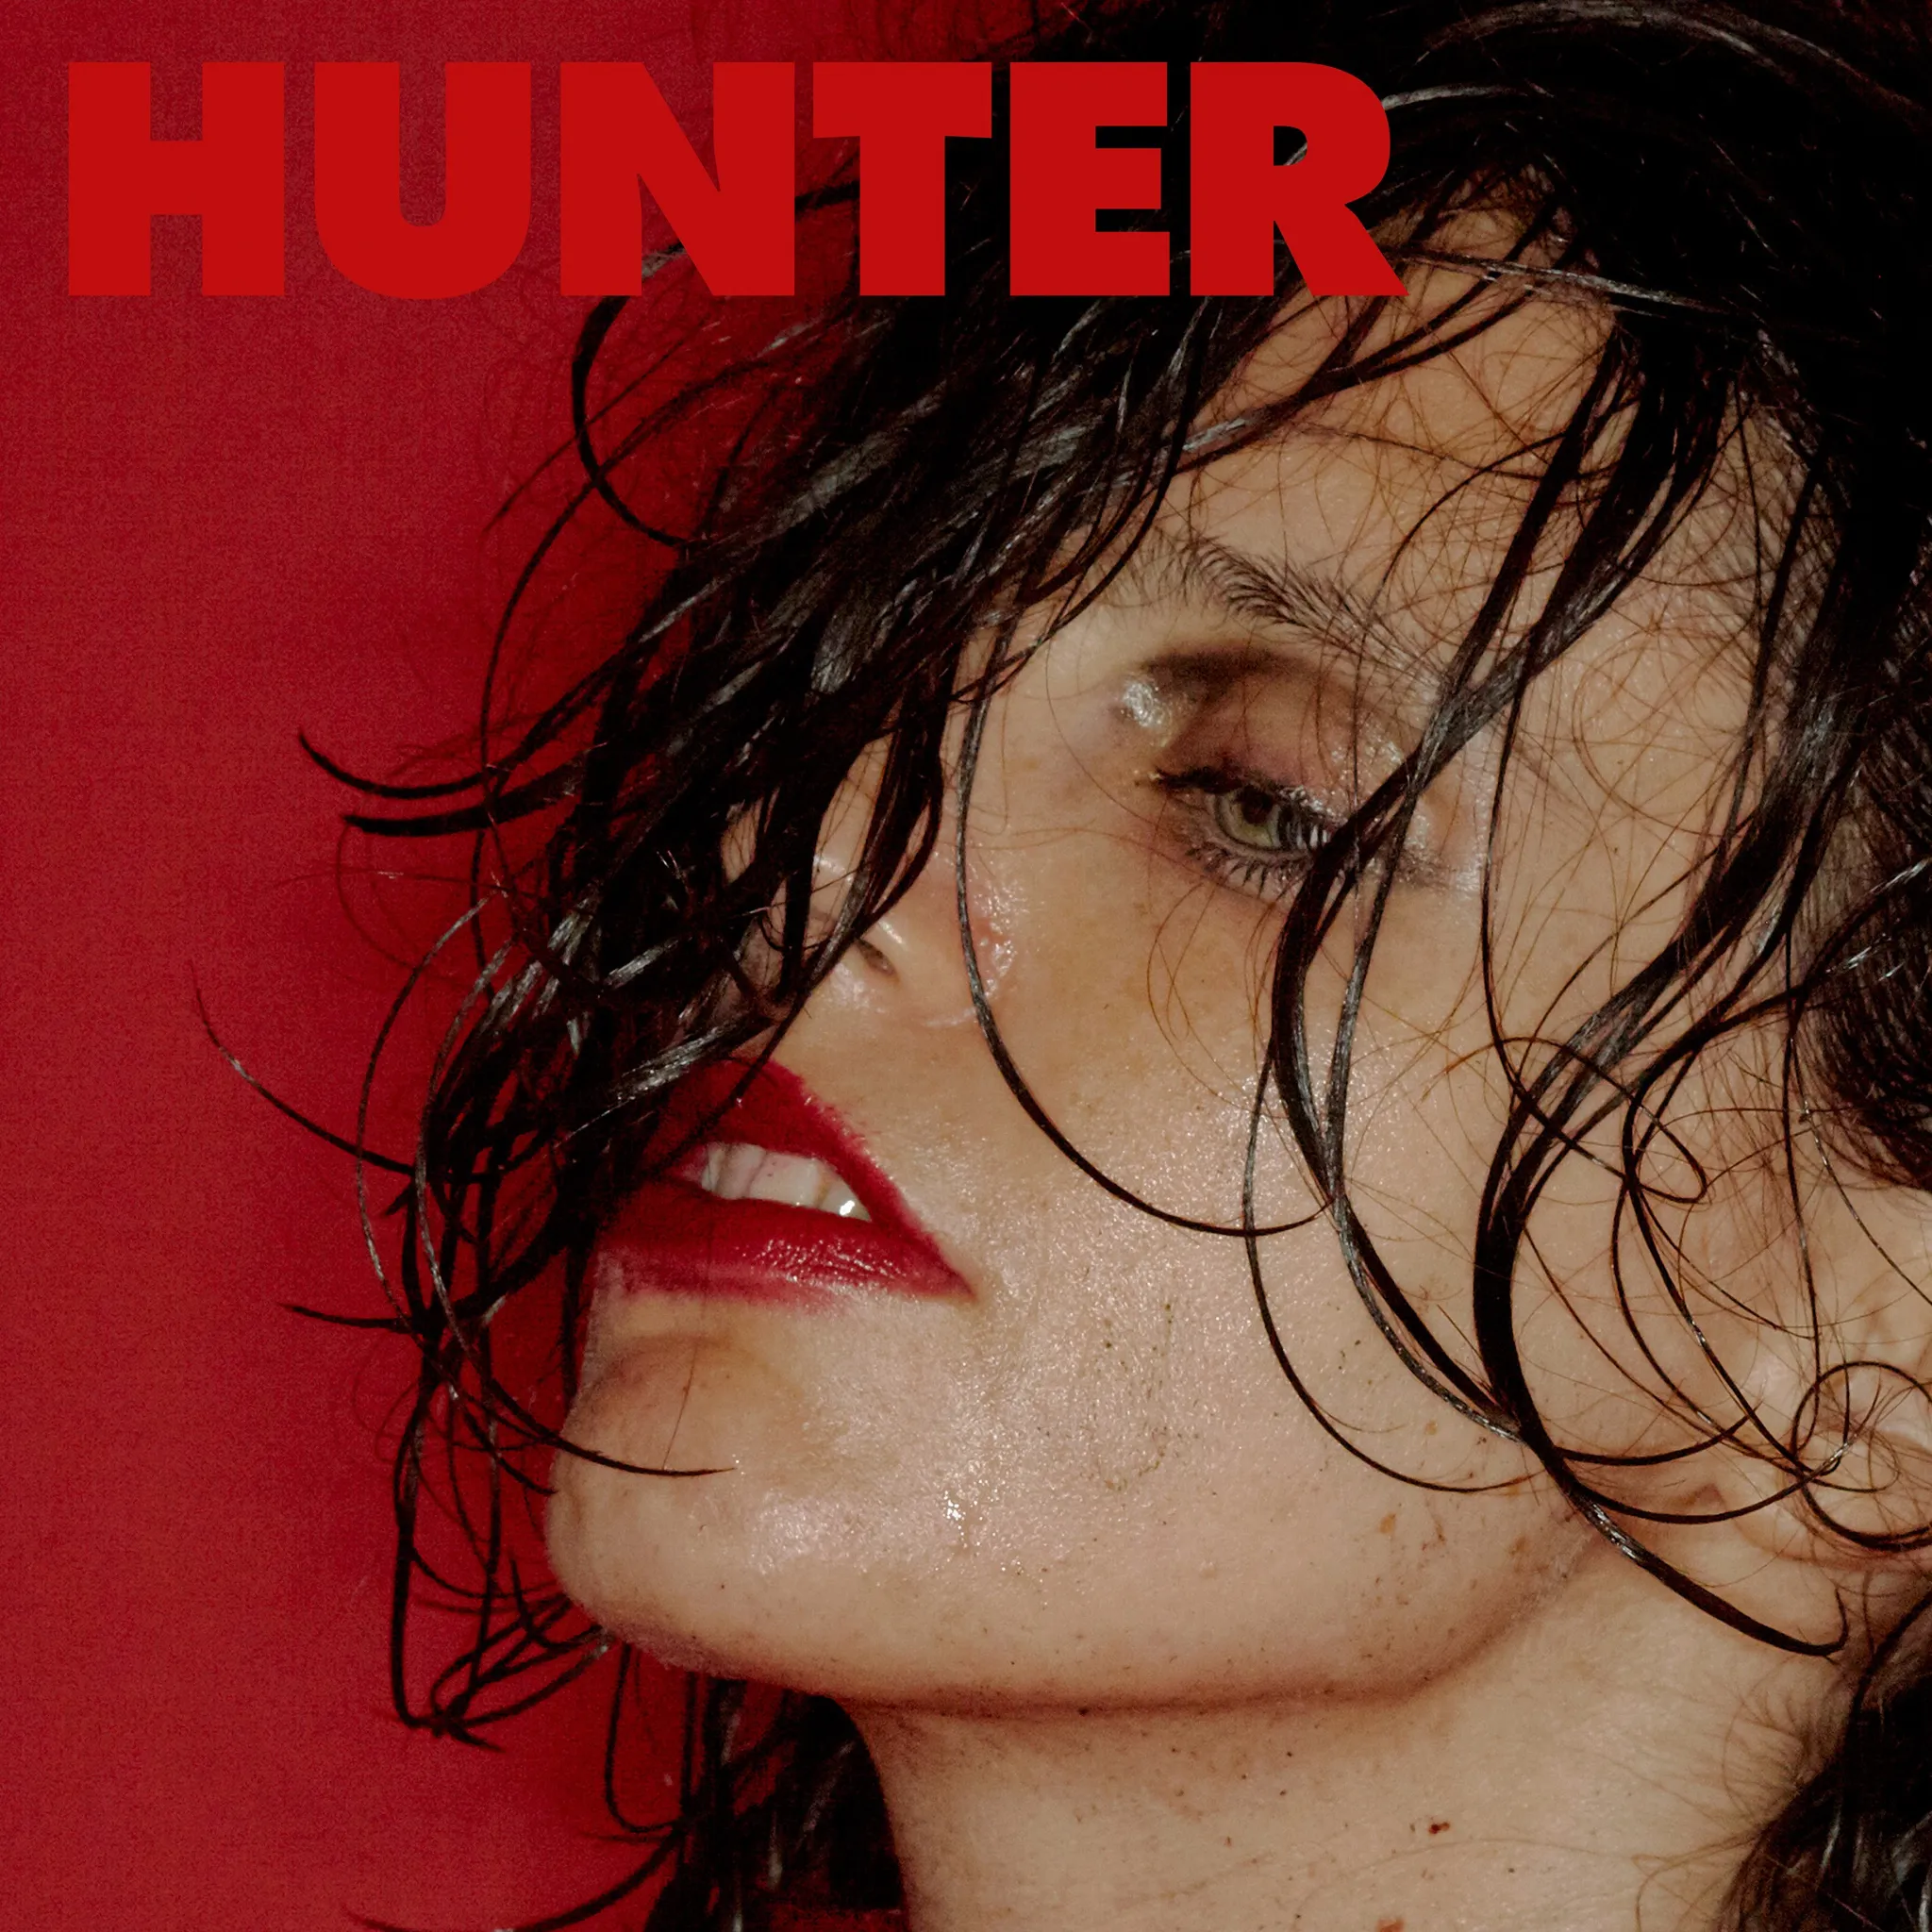 Buy Hunter via Rough Trade